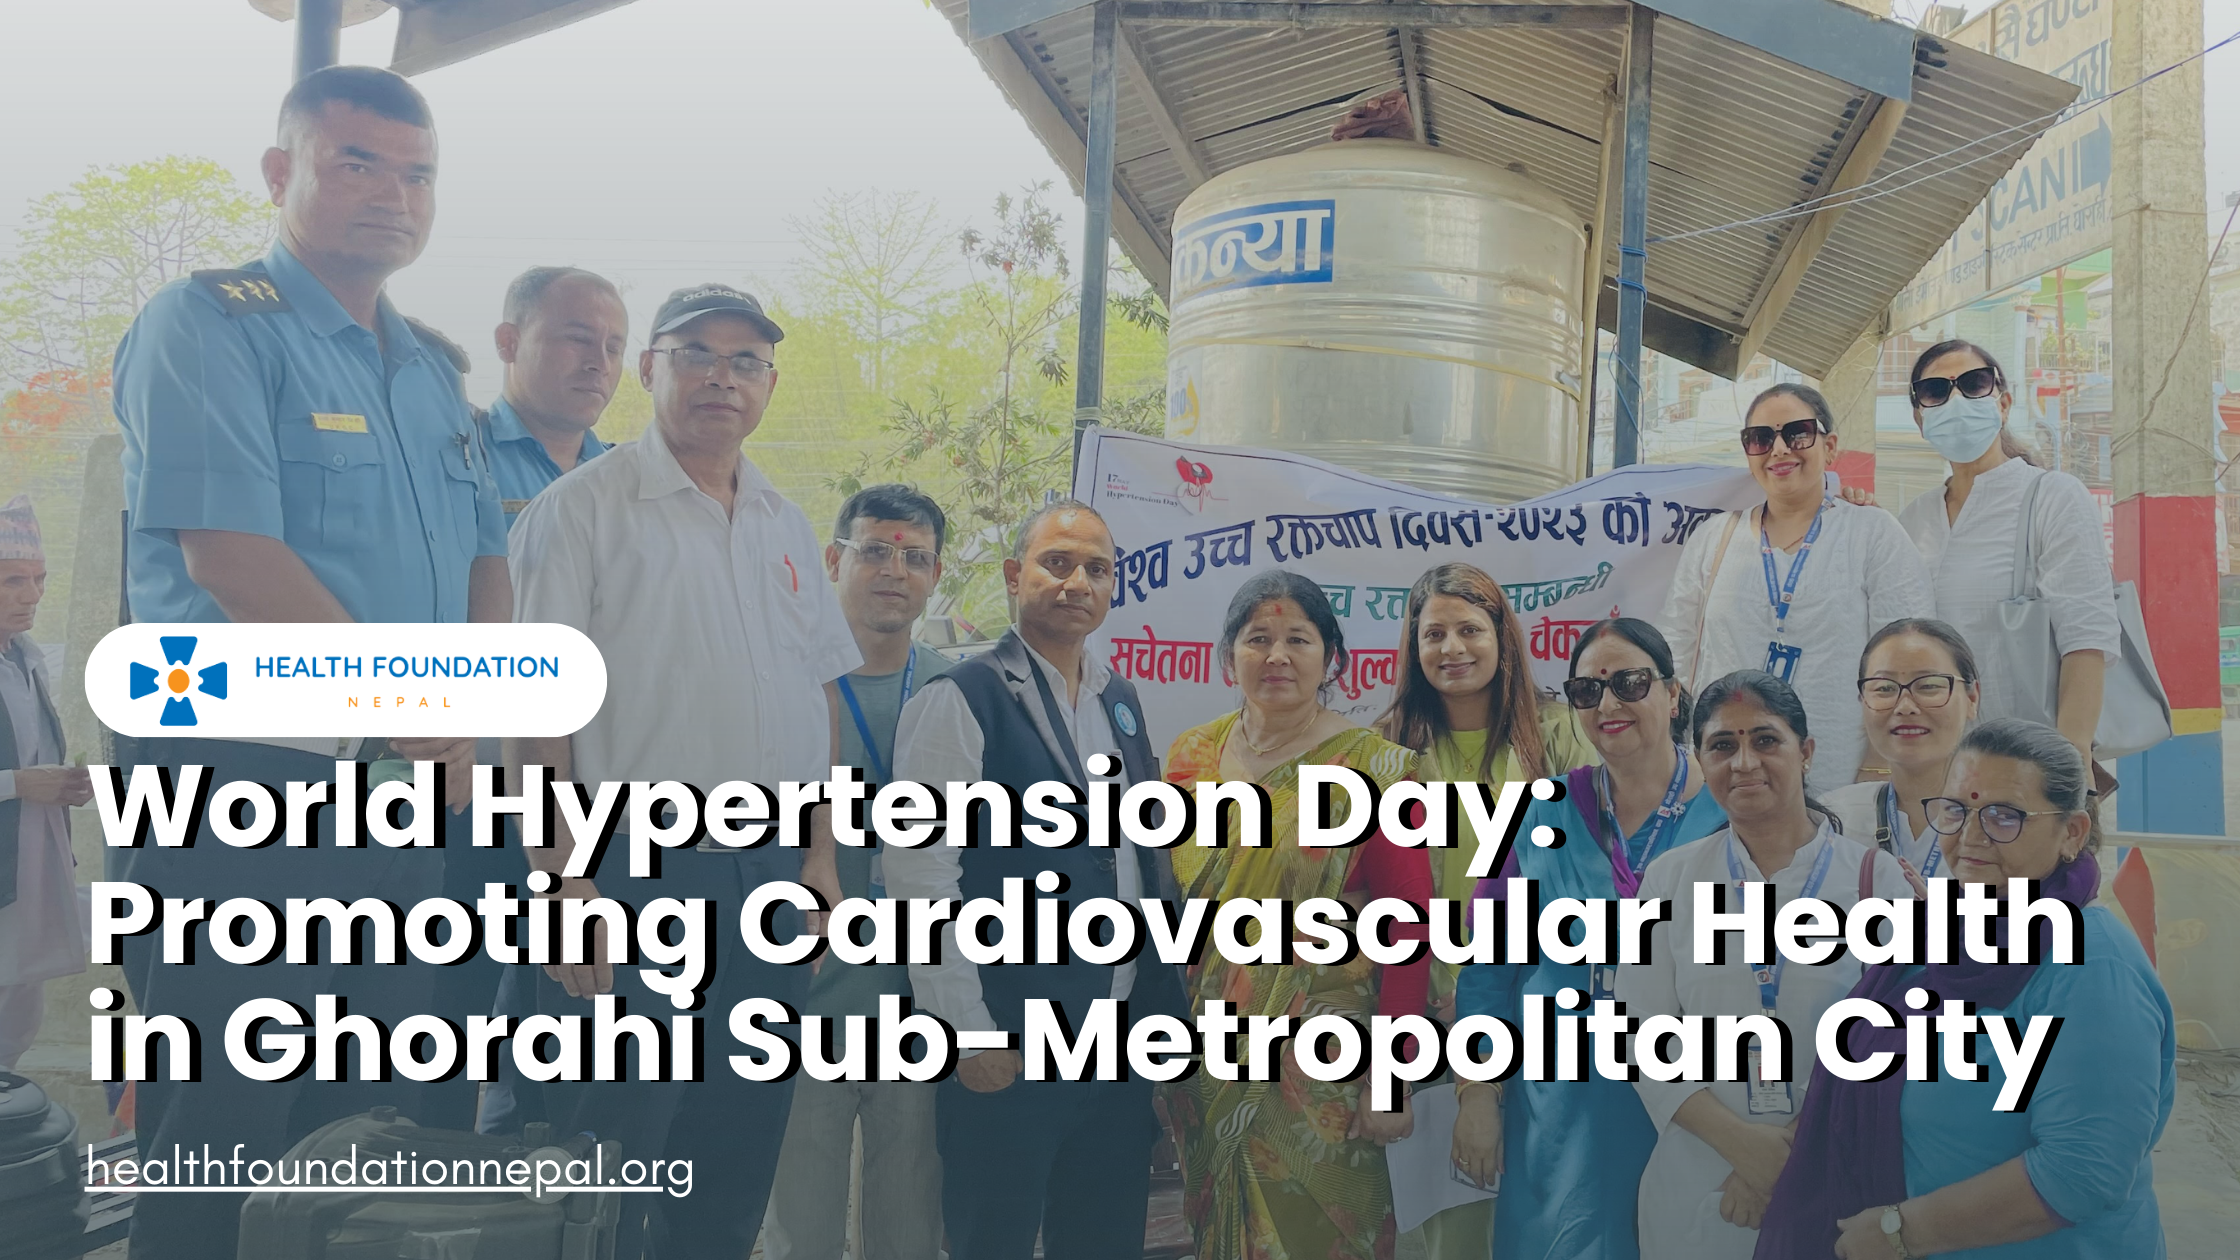 World Hypertension Day: Promoting Cardiovascular Health in Ghorahi Sub-Metropolitan City